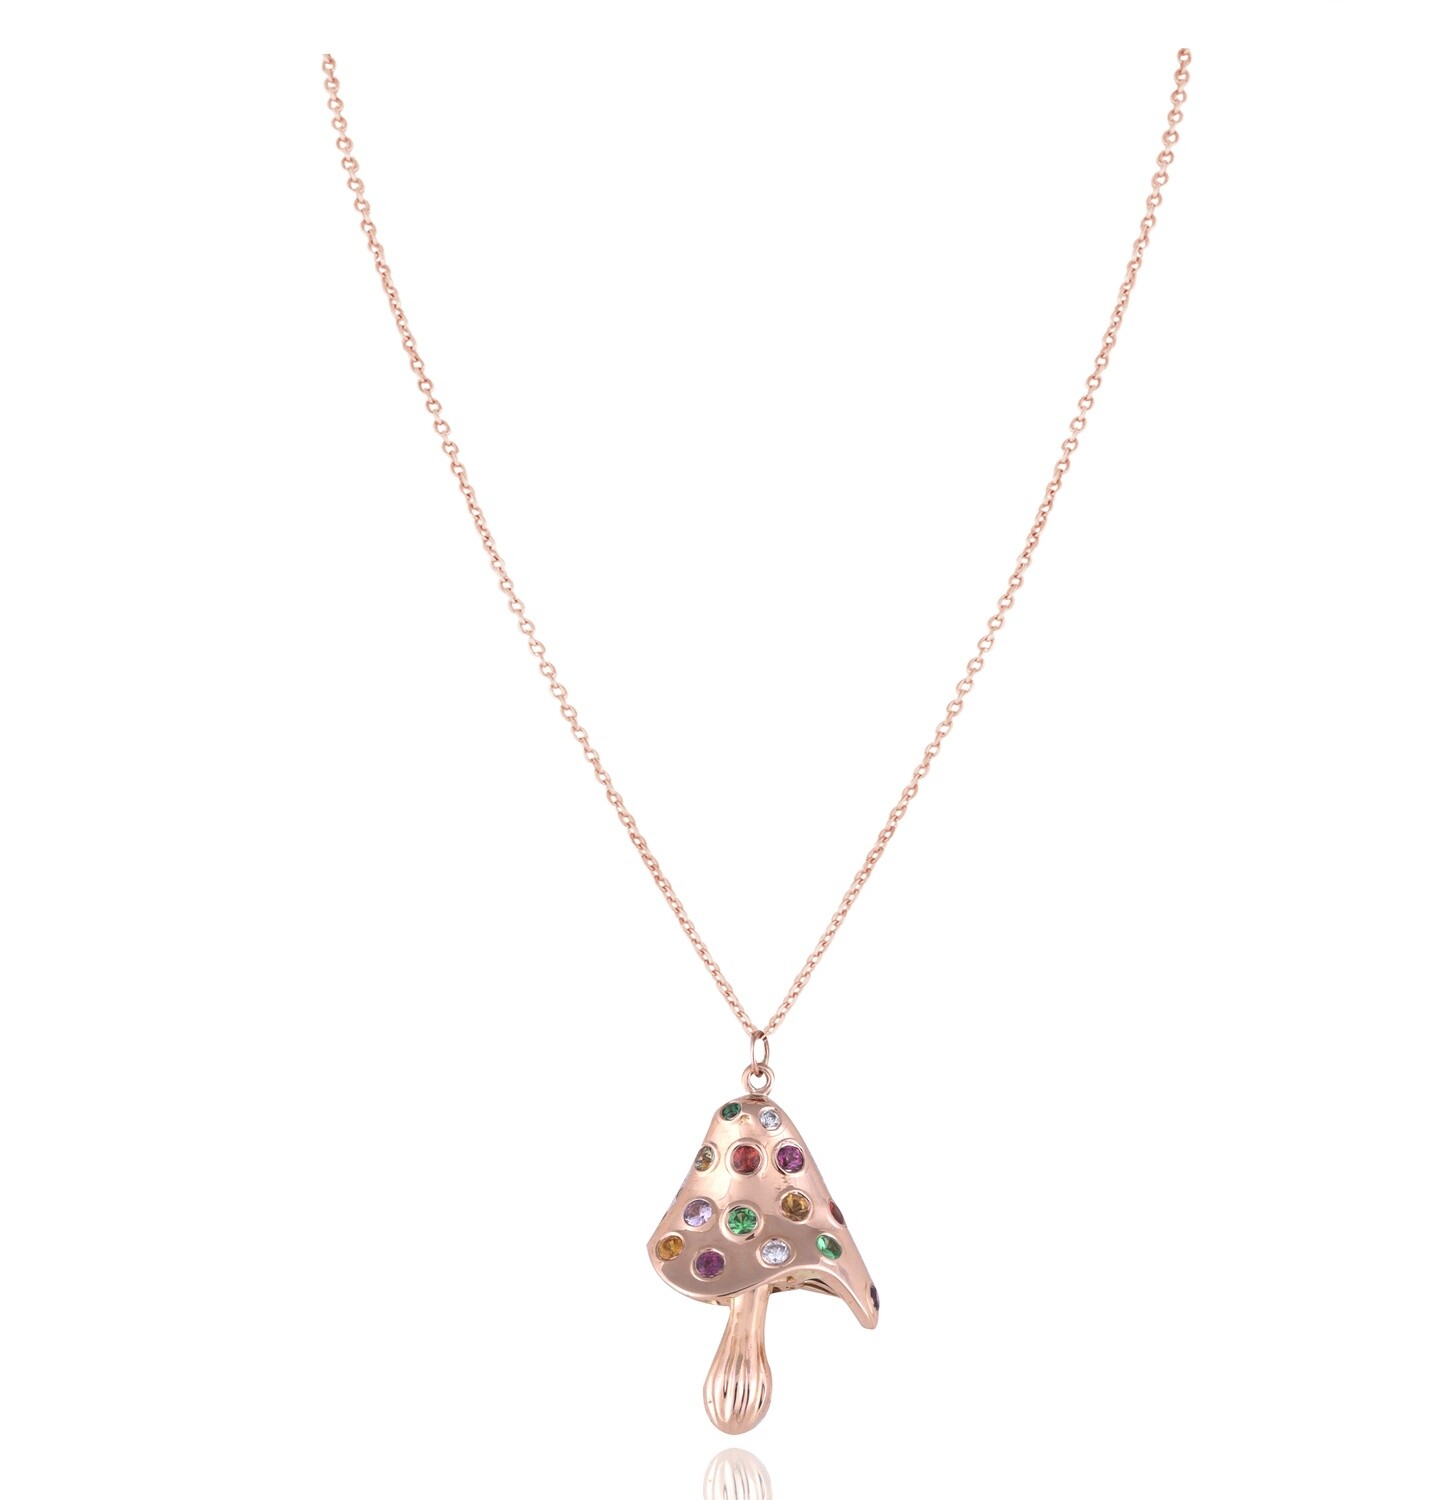 Wild Mushroom Diamond Necklace with Sapphire and Precious Colored Stones